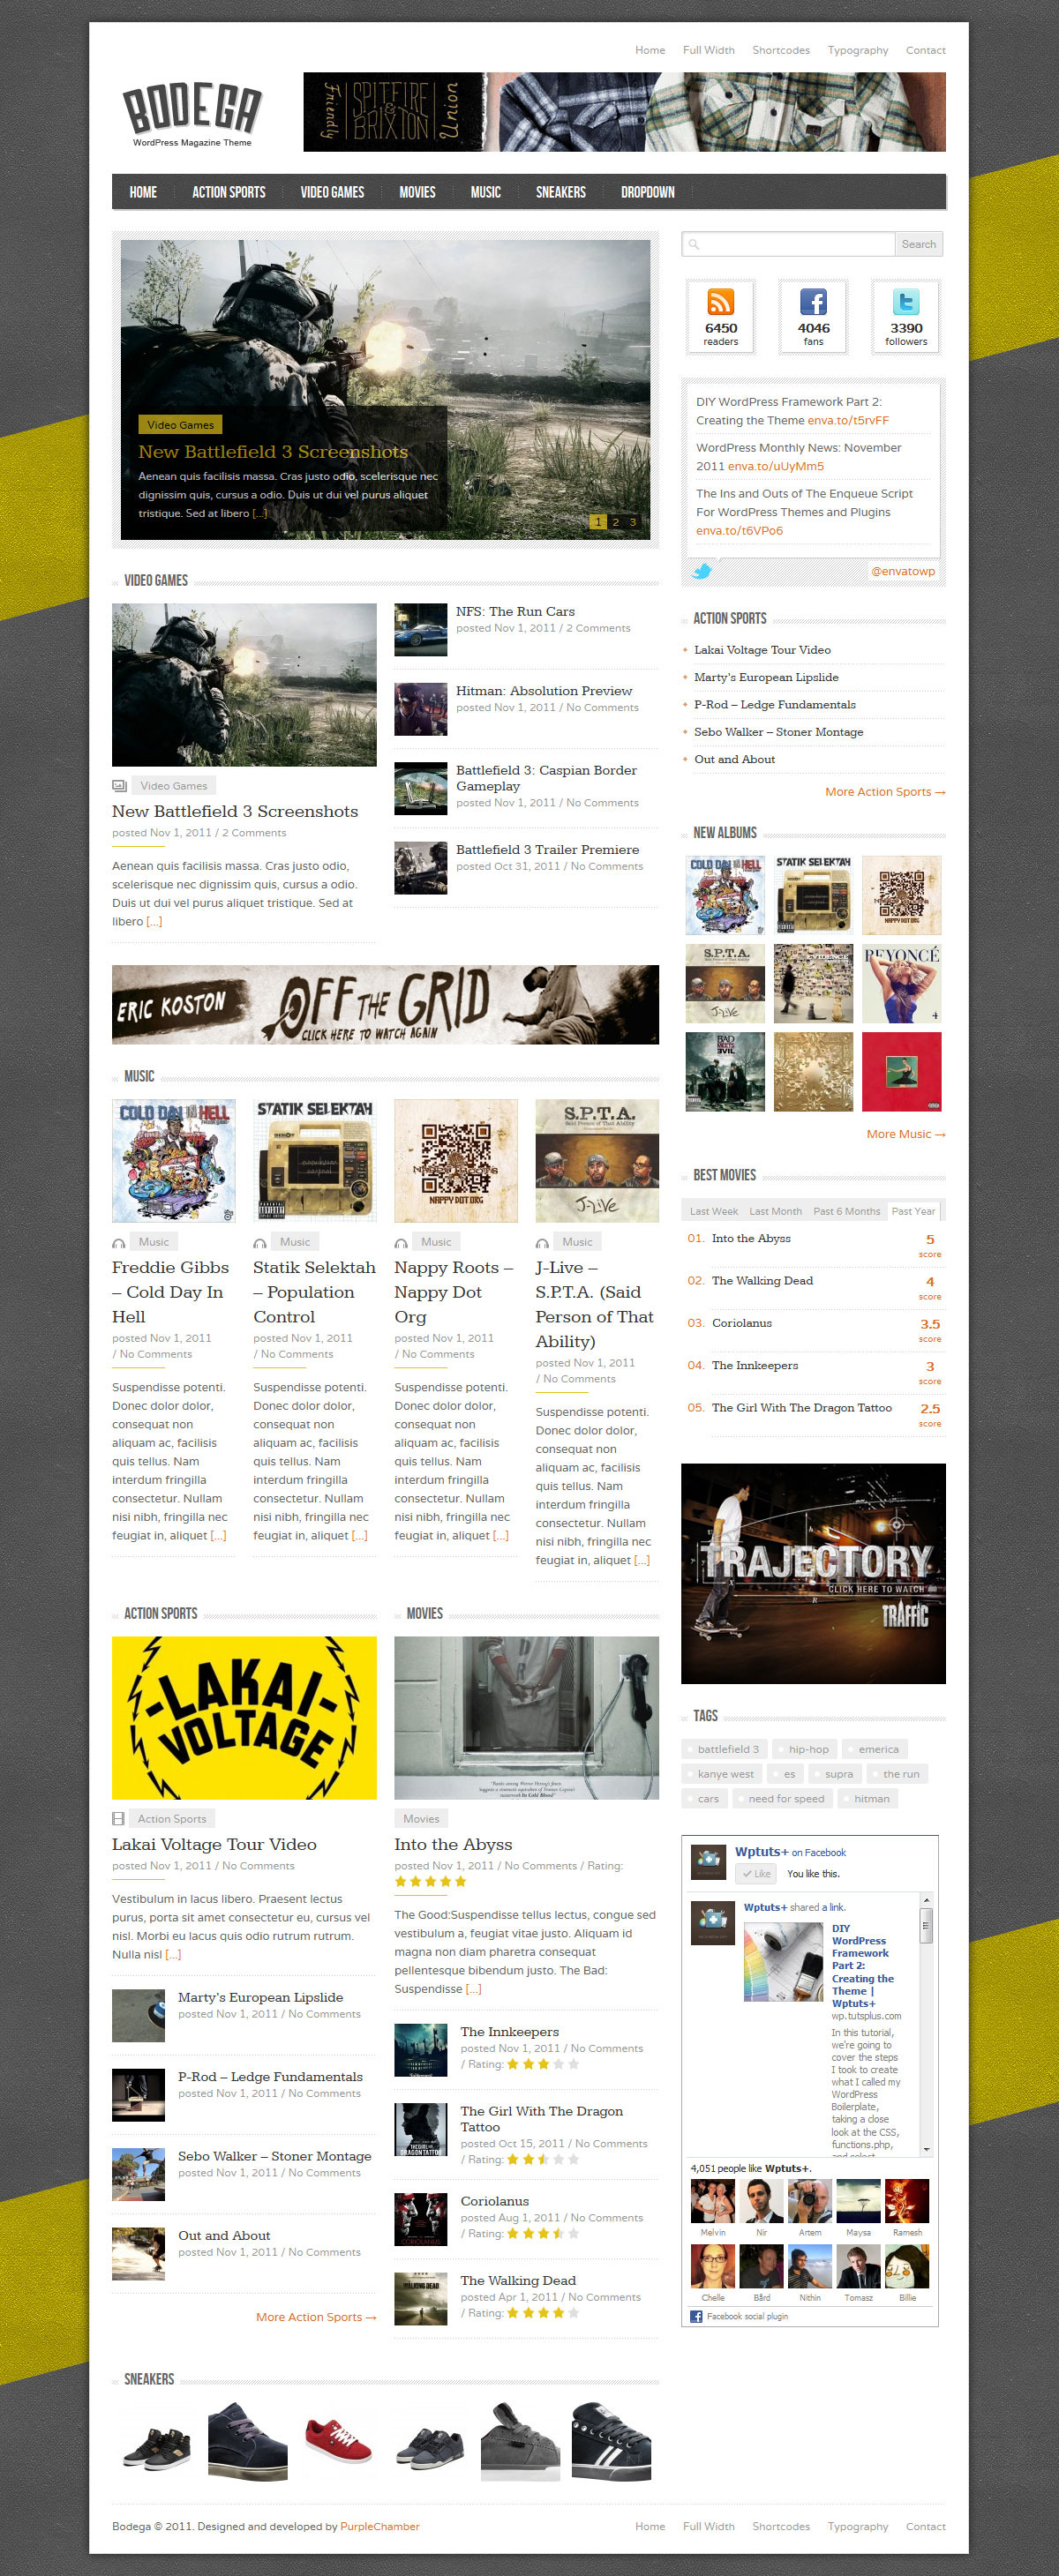 Bodega - WordPress Blog/Magazine Theme - Gaming|Magazine